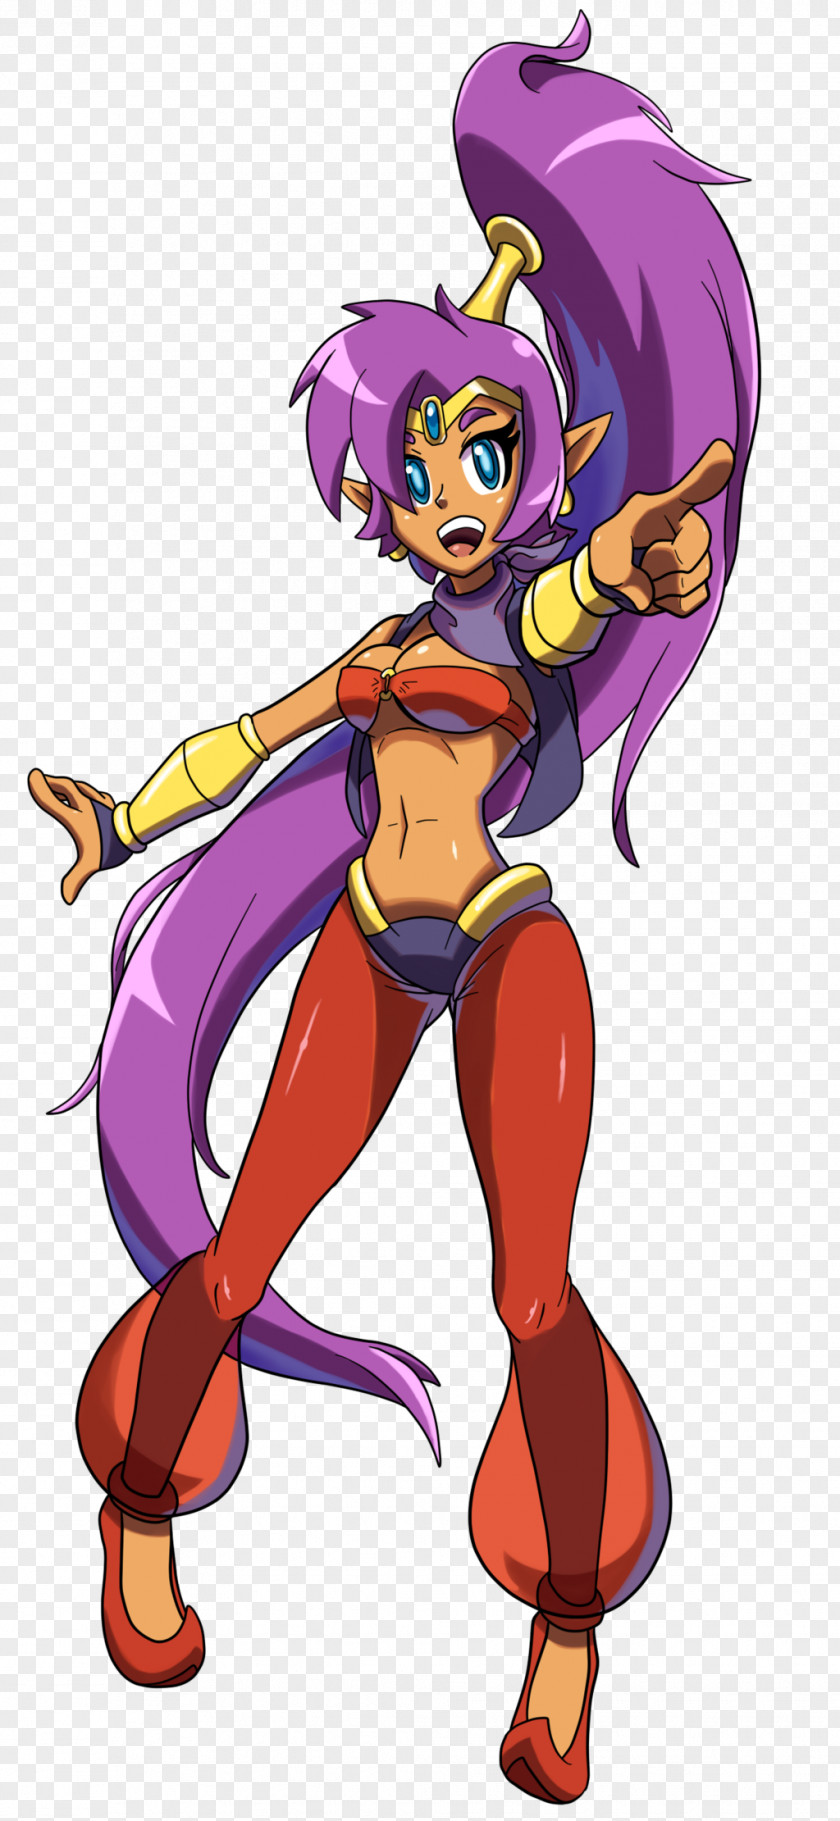 Shantae: Half-Genie Hero Anime TV Tropes Video Game PNG game, shantae clipart PNG